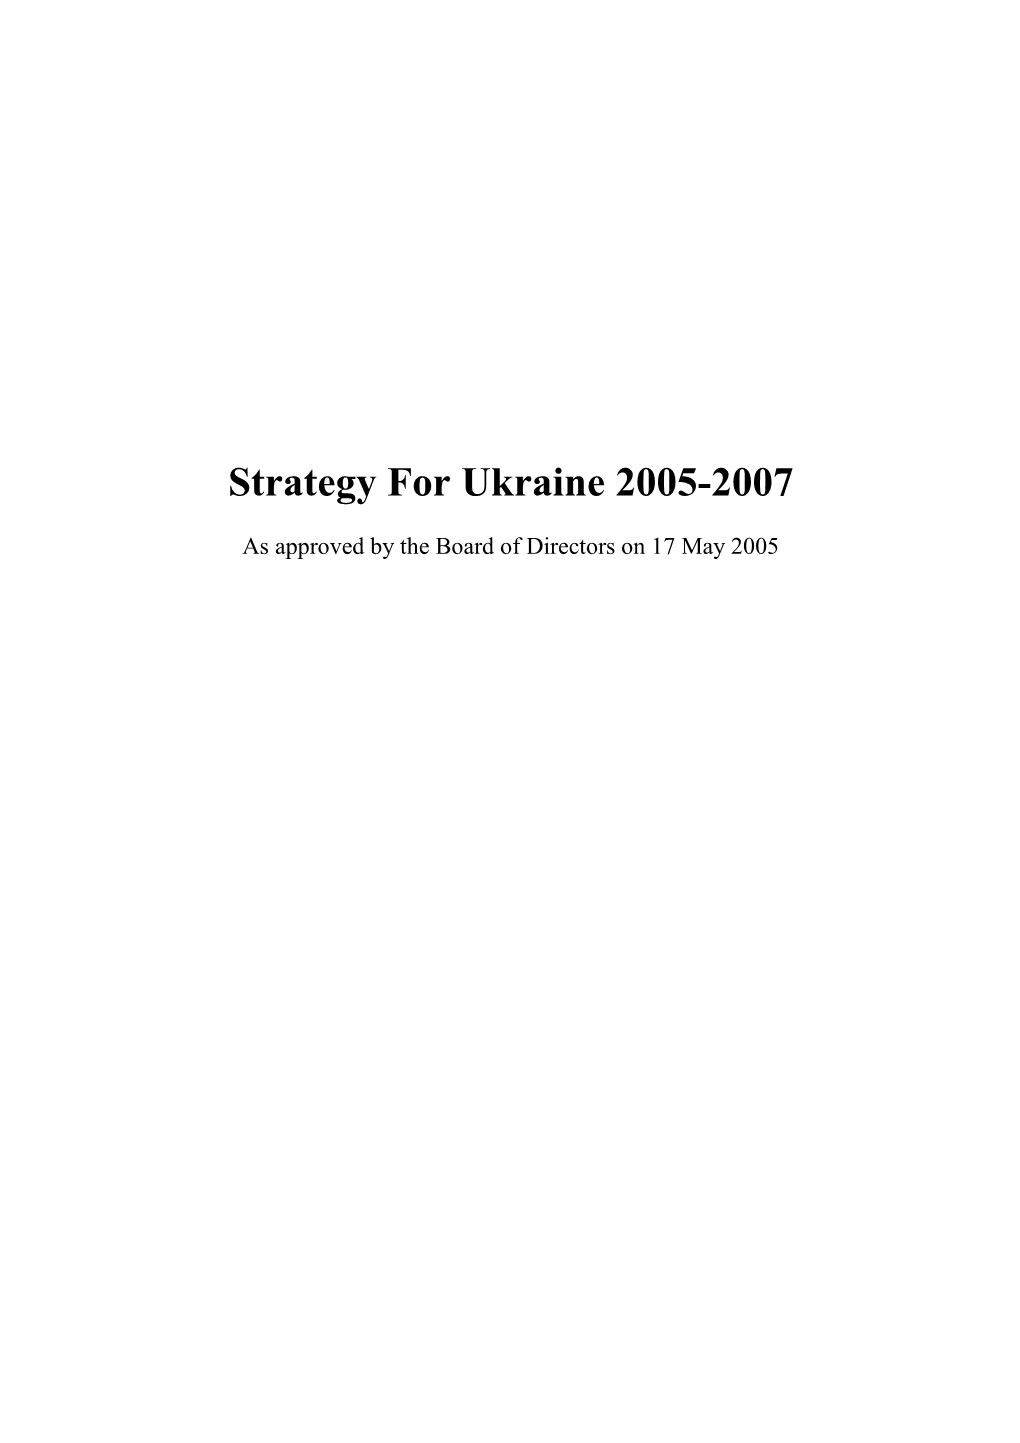 Strategy for Ukraine 2005-2007